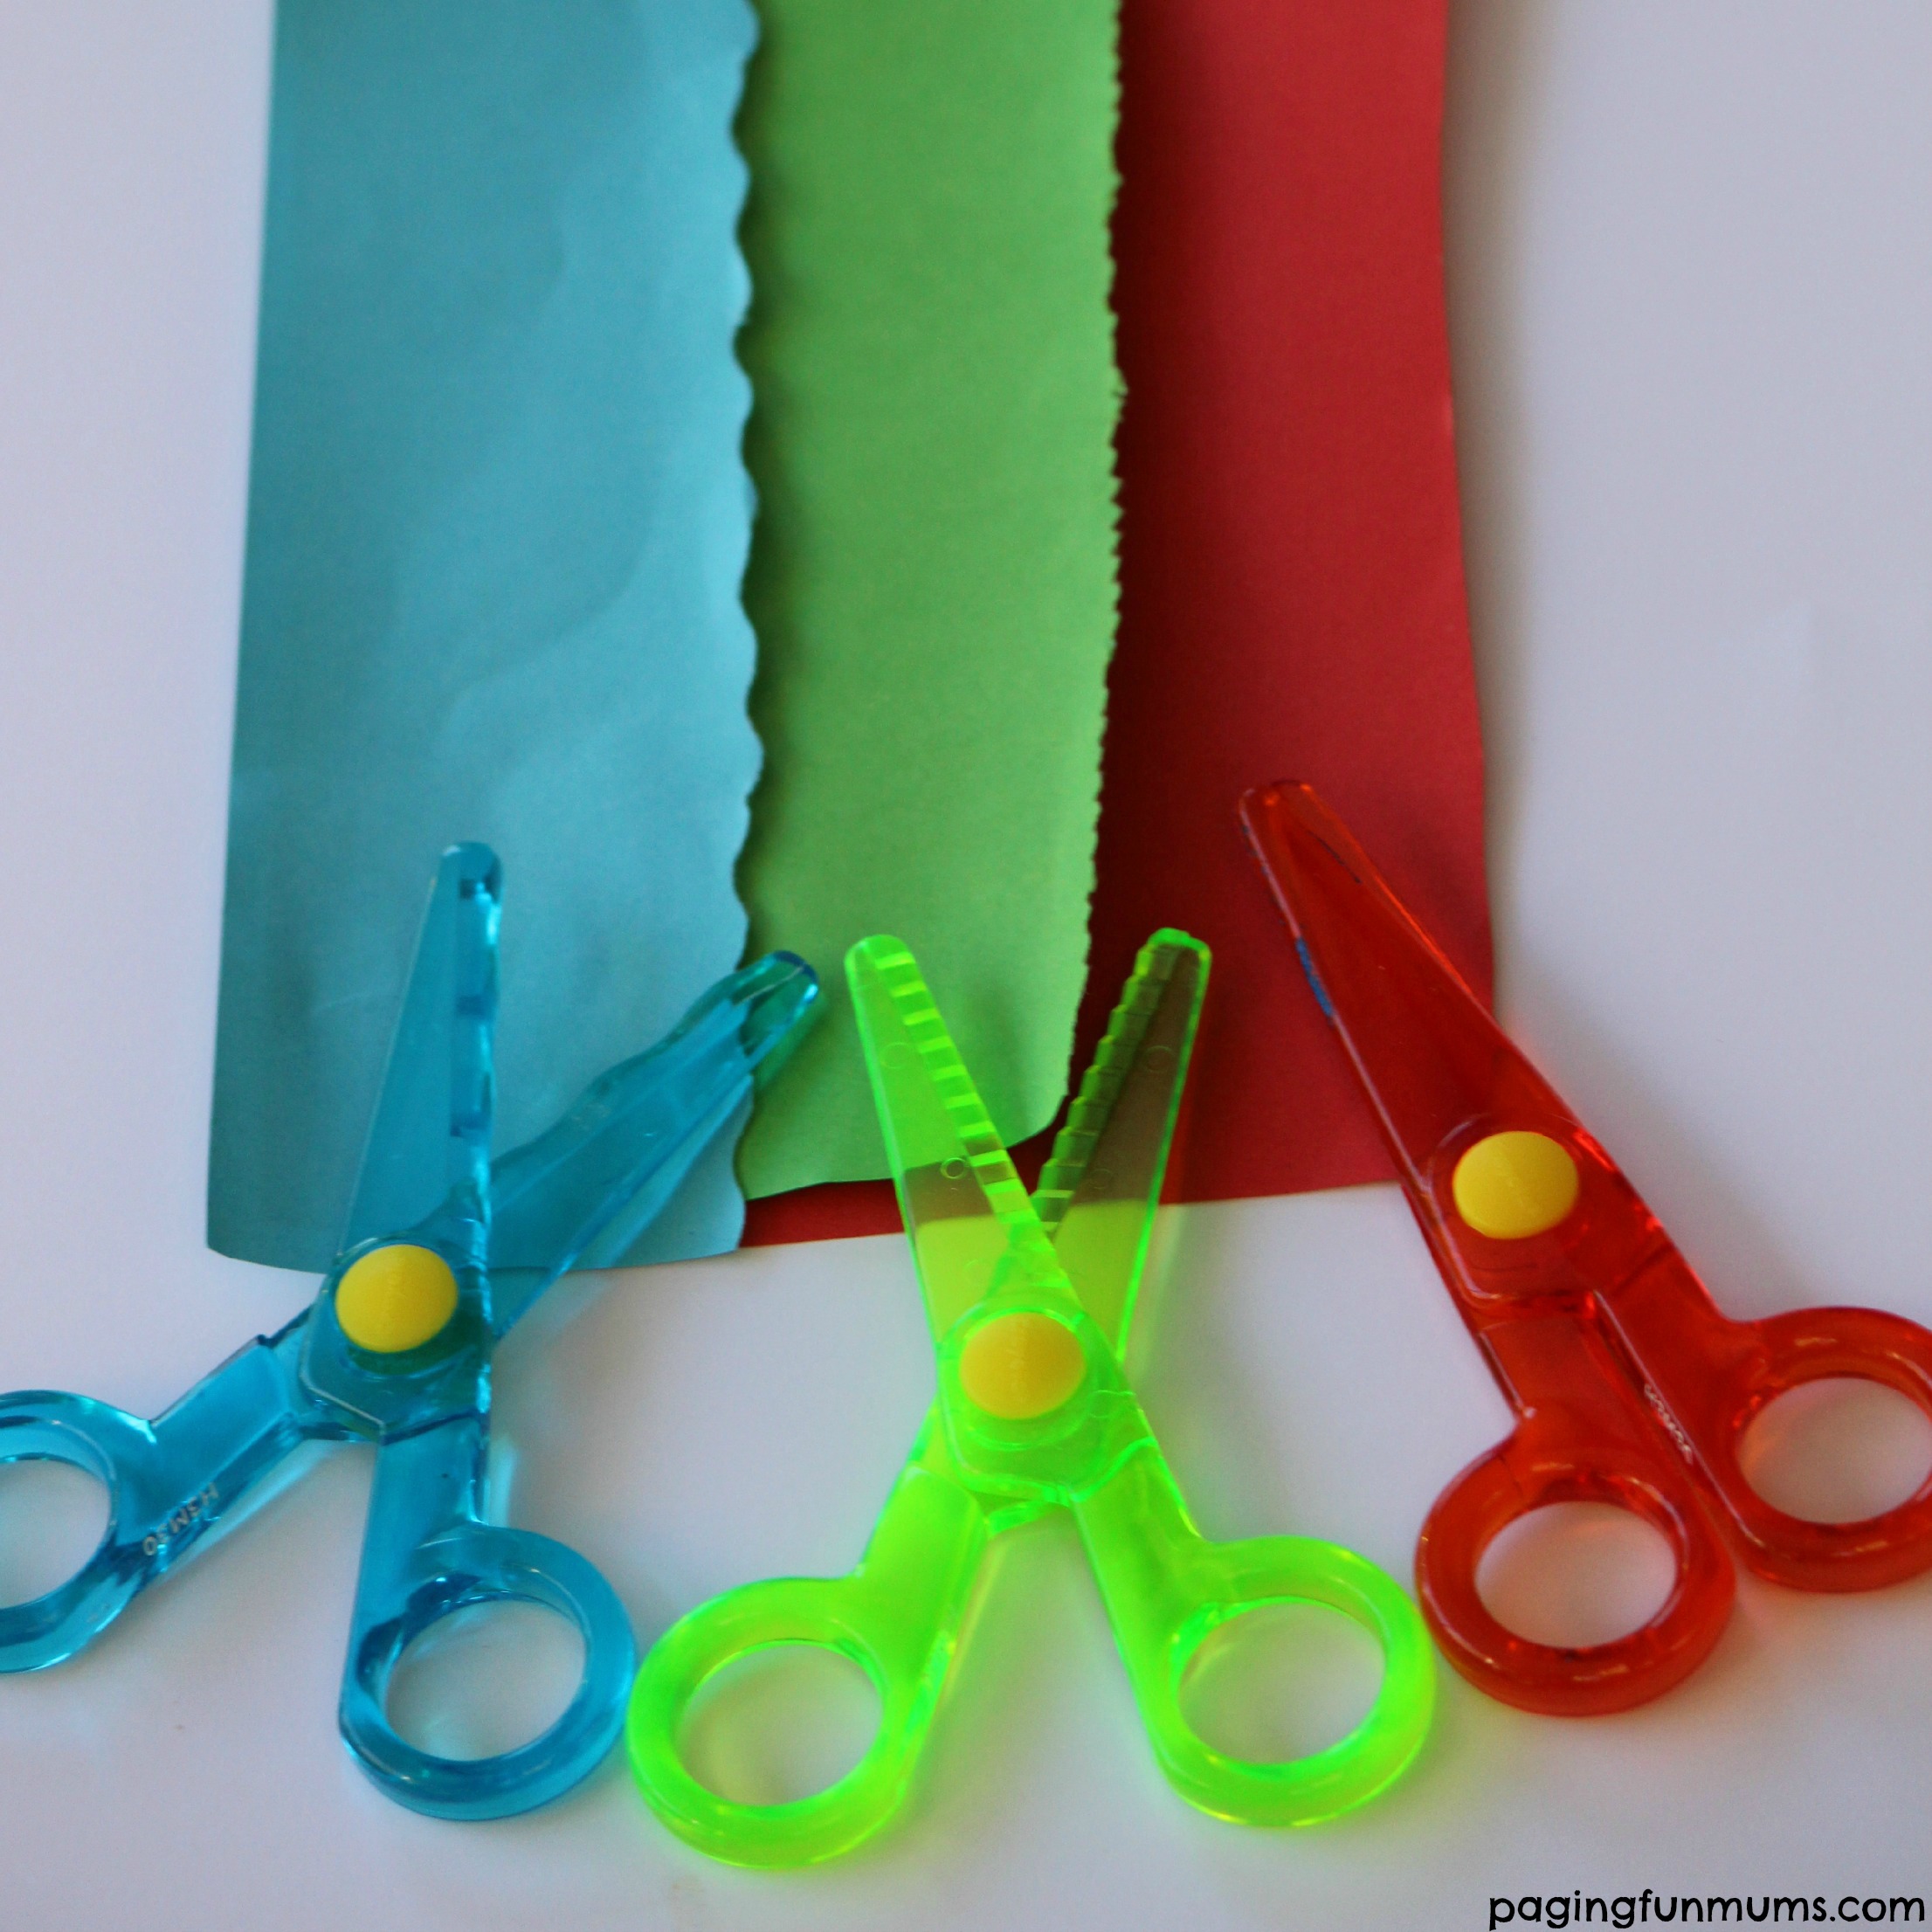 https://pagingfunmums.com/wp-content/uploads/2014/07/My-First-Crayola-Scissors-three-different-cutting-patterns.jpg